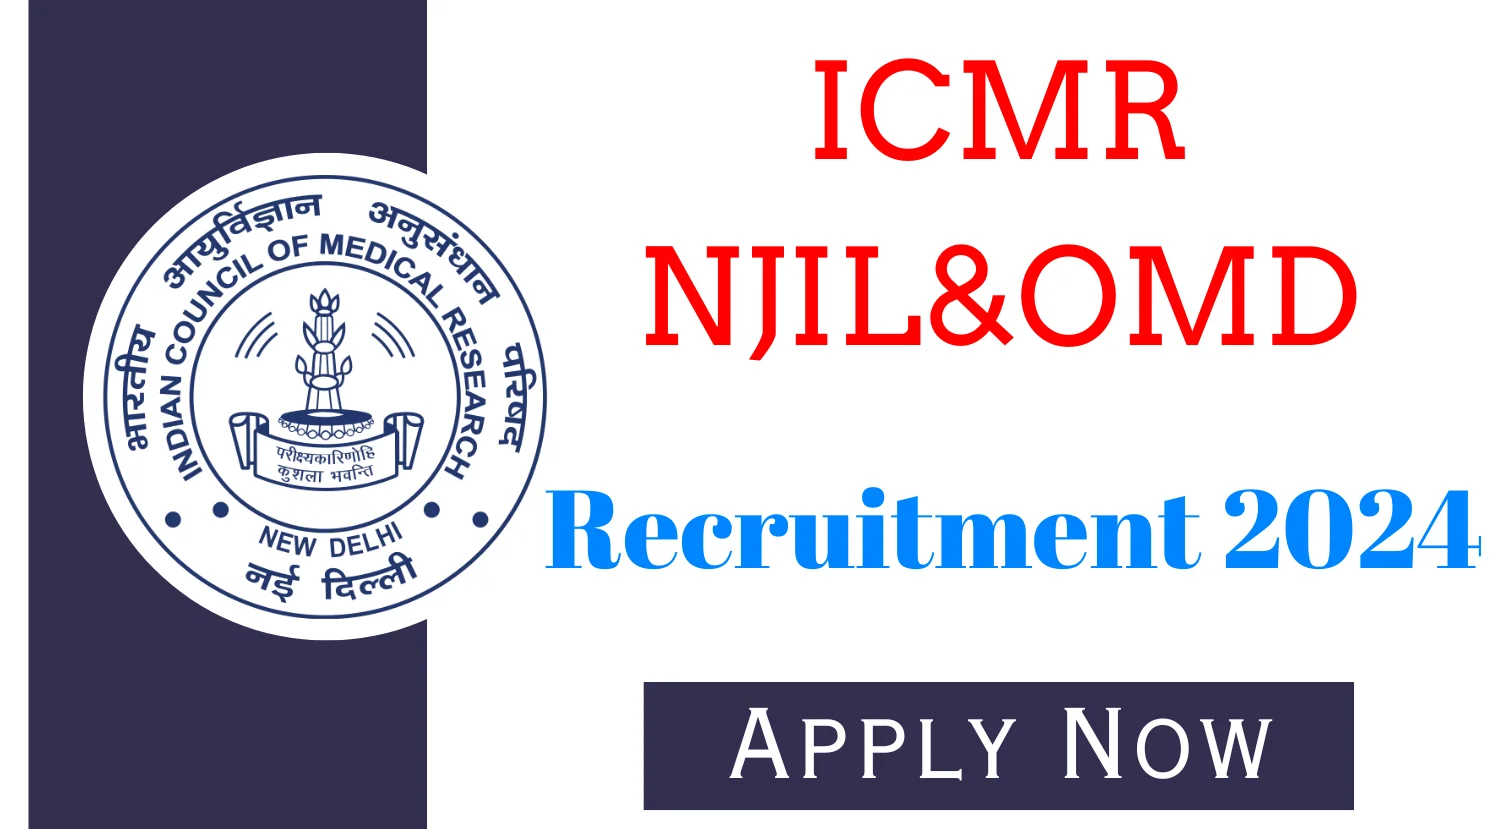 ICMR NJILOMD Recruitment 2024